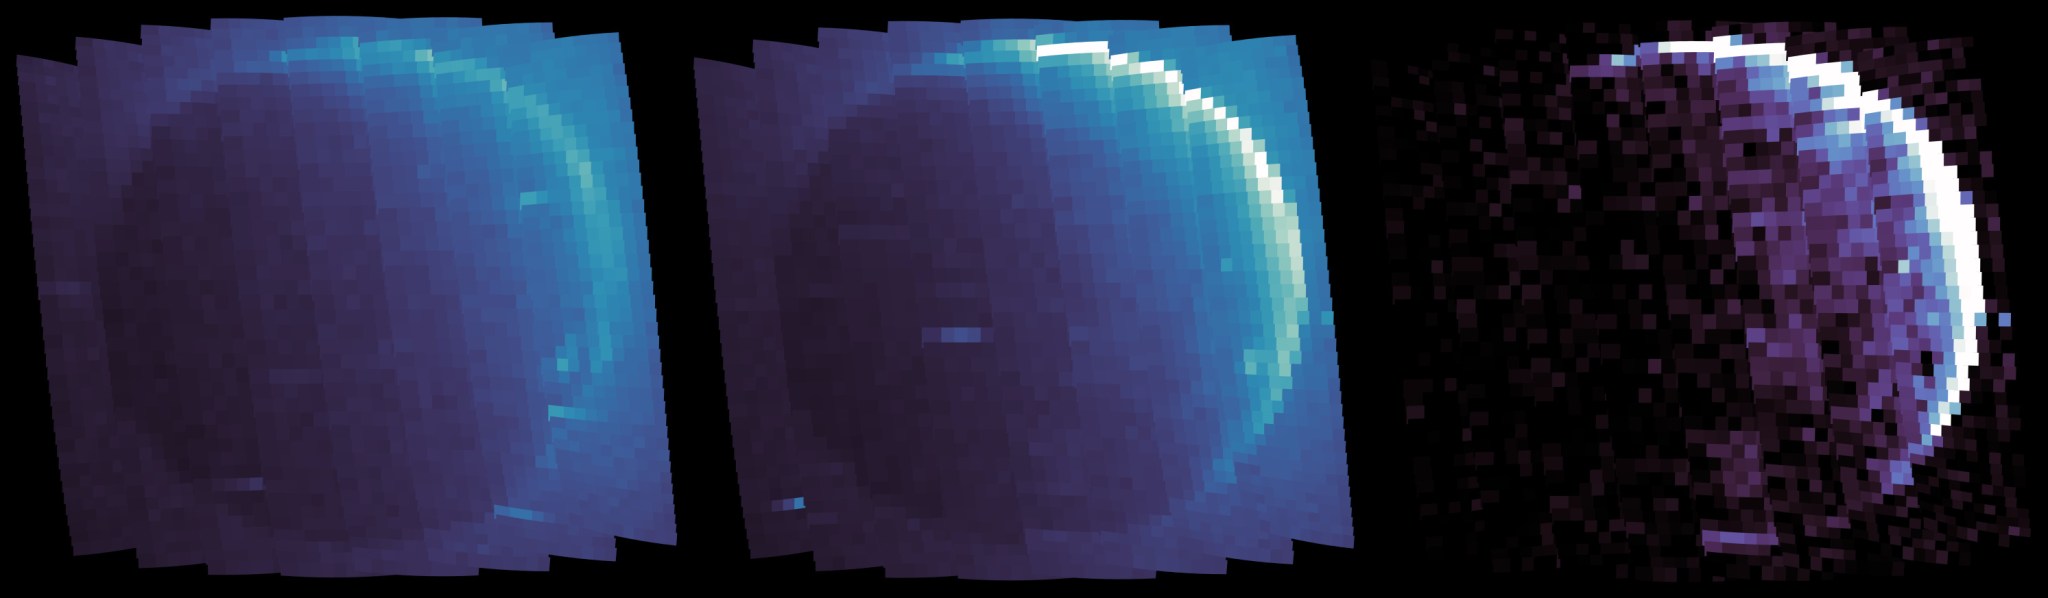 MAVEN image of proton aurora